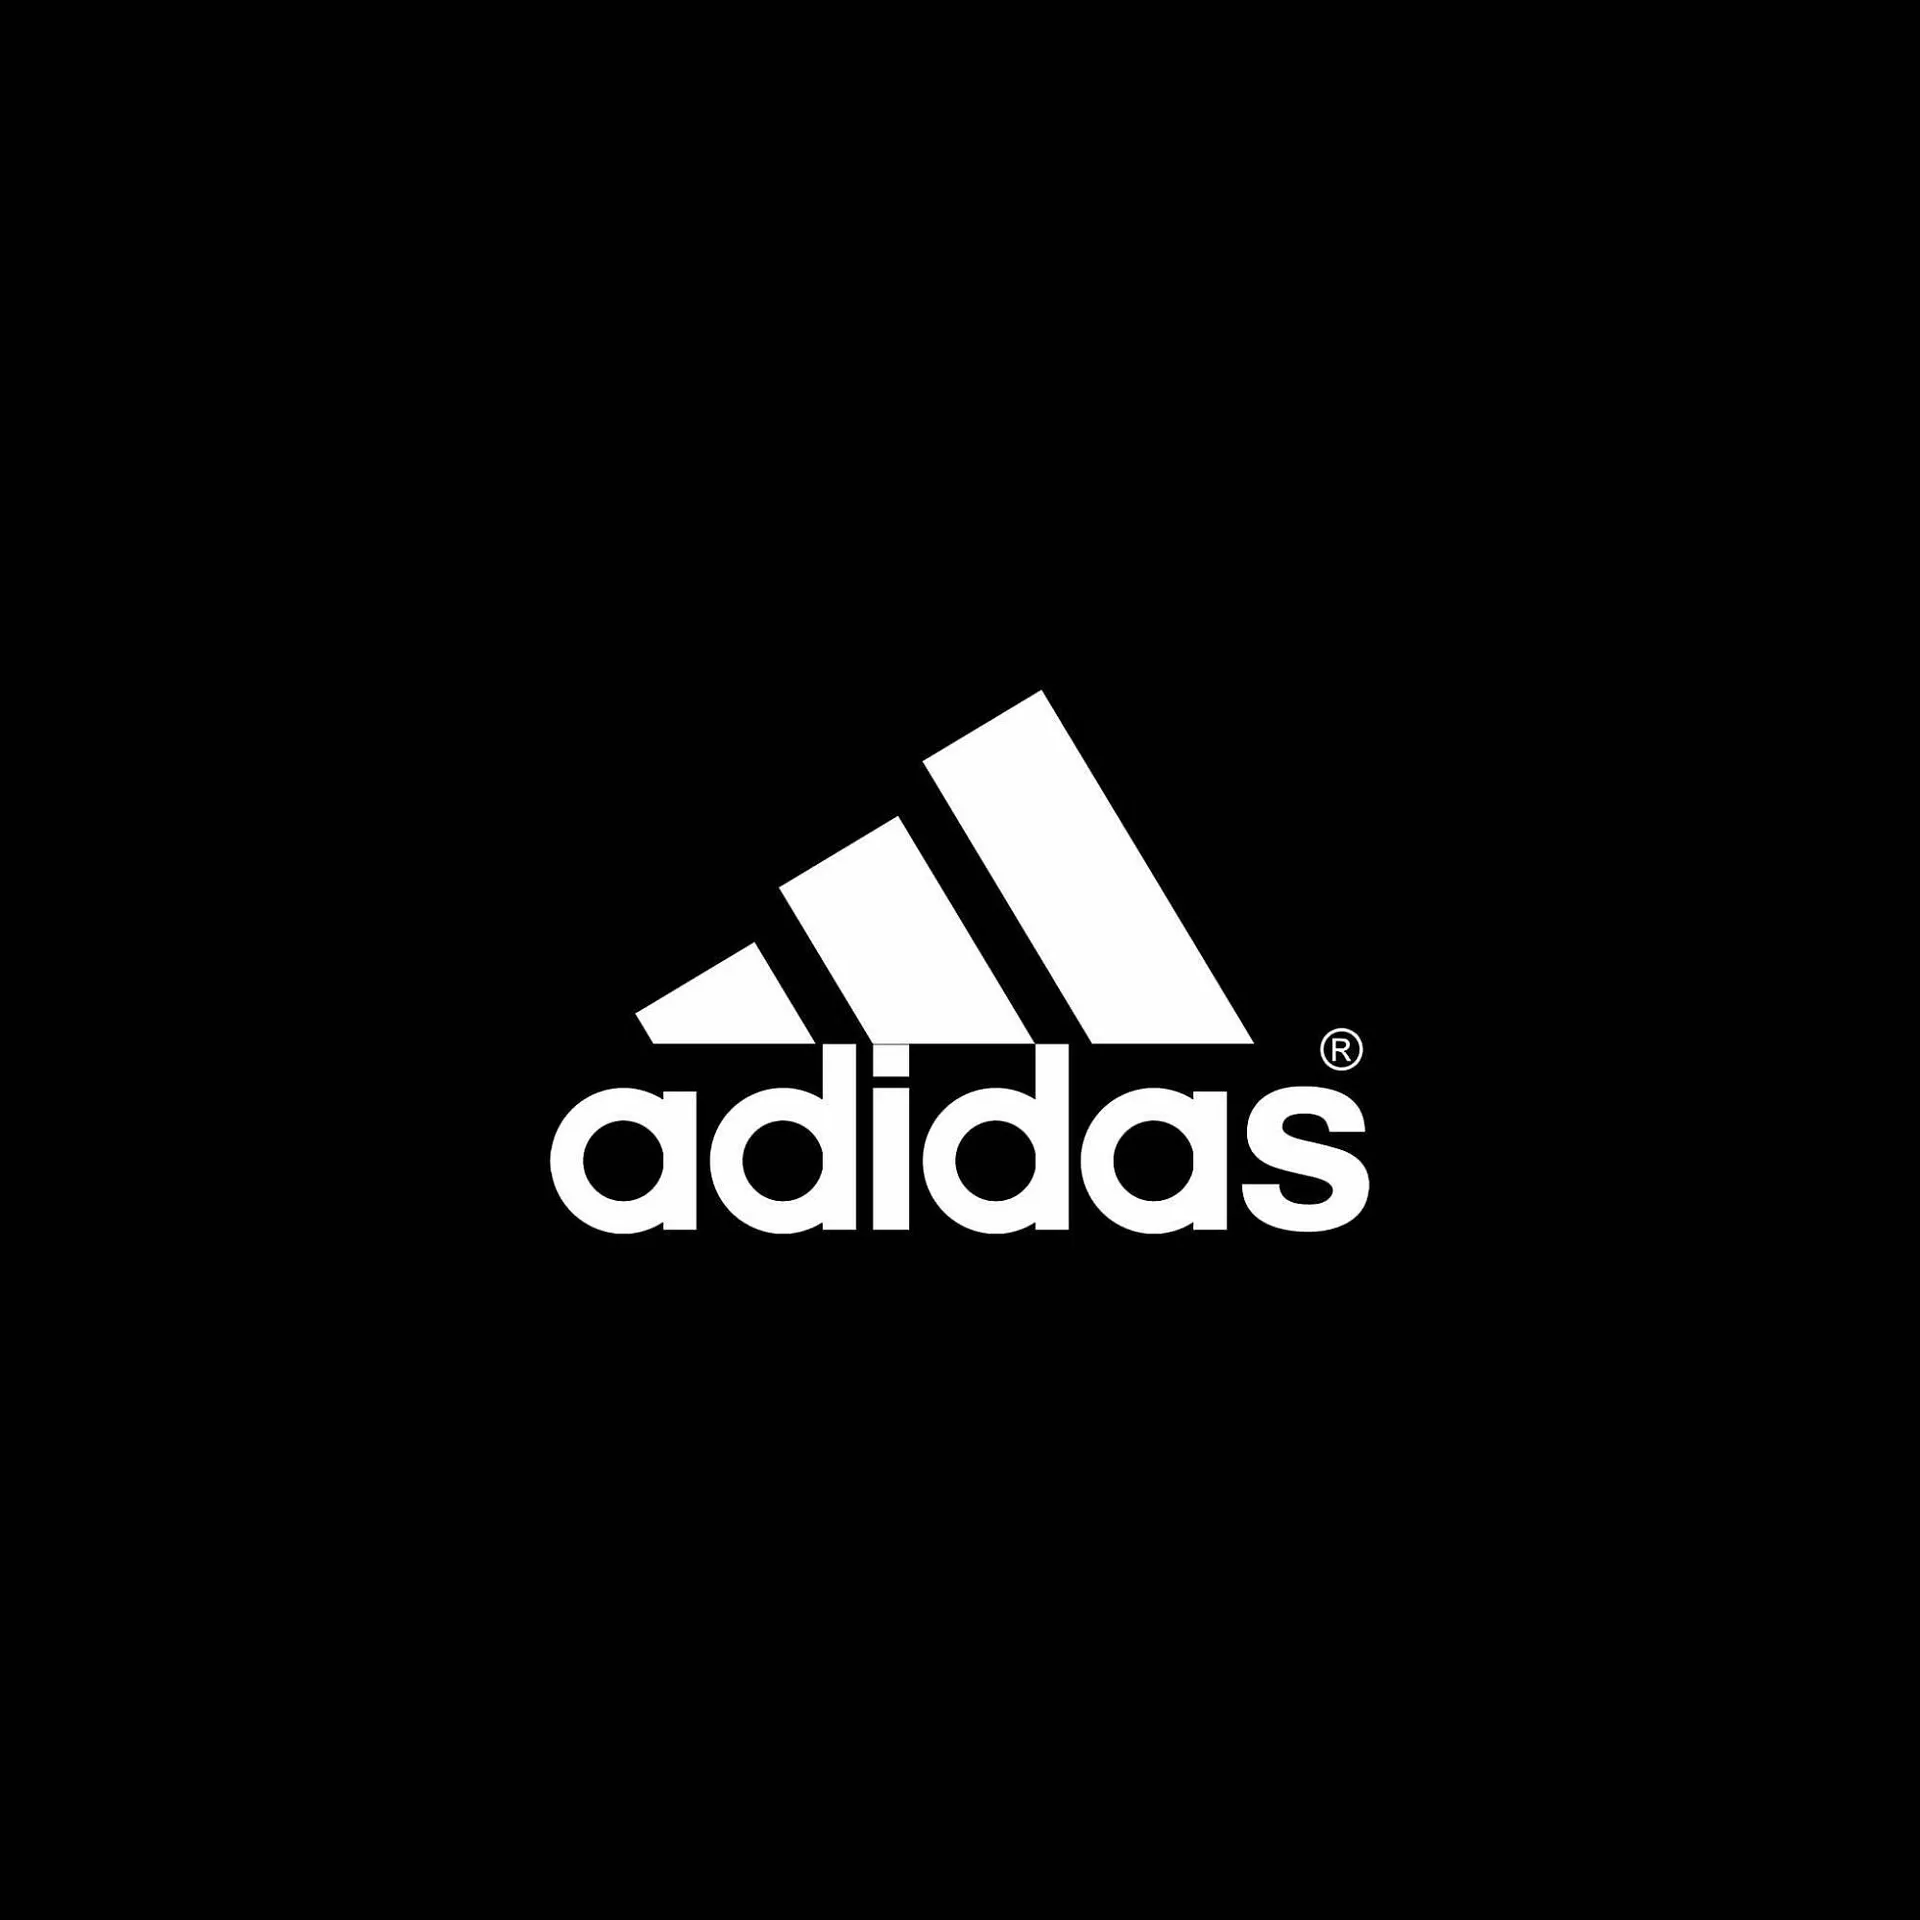 Adidas reklamblad - 12